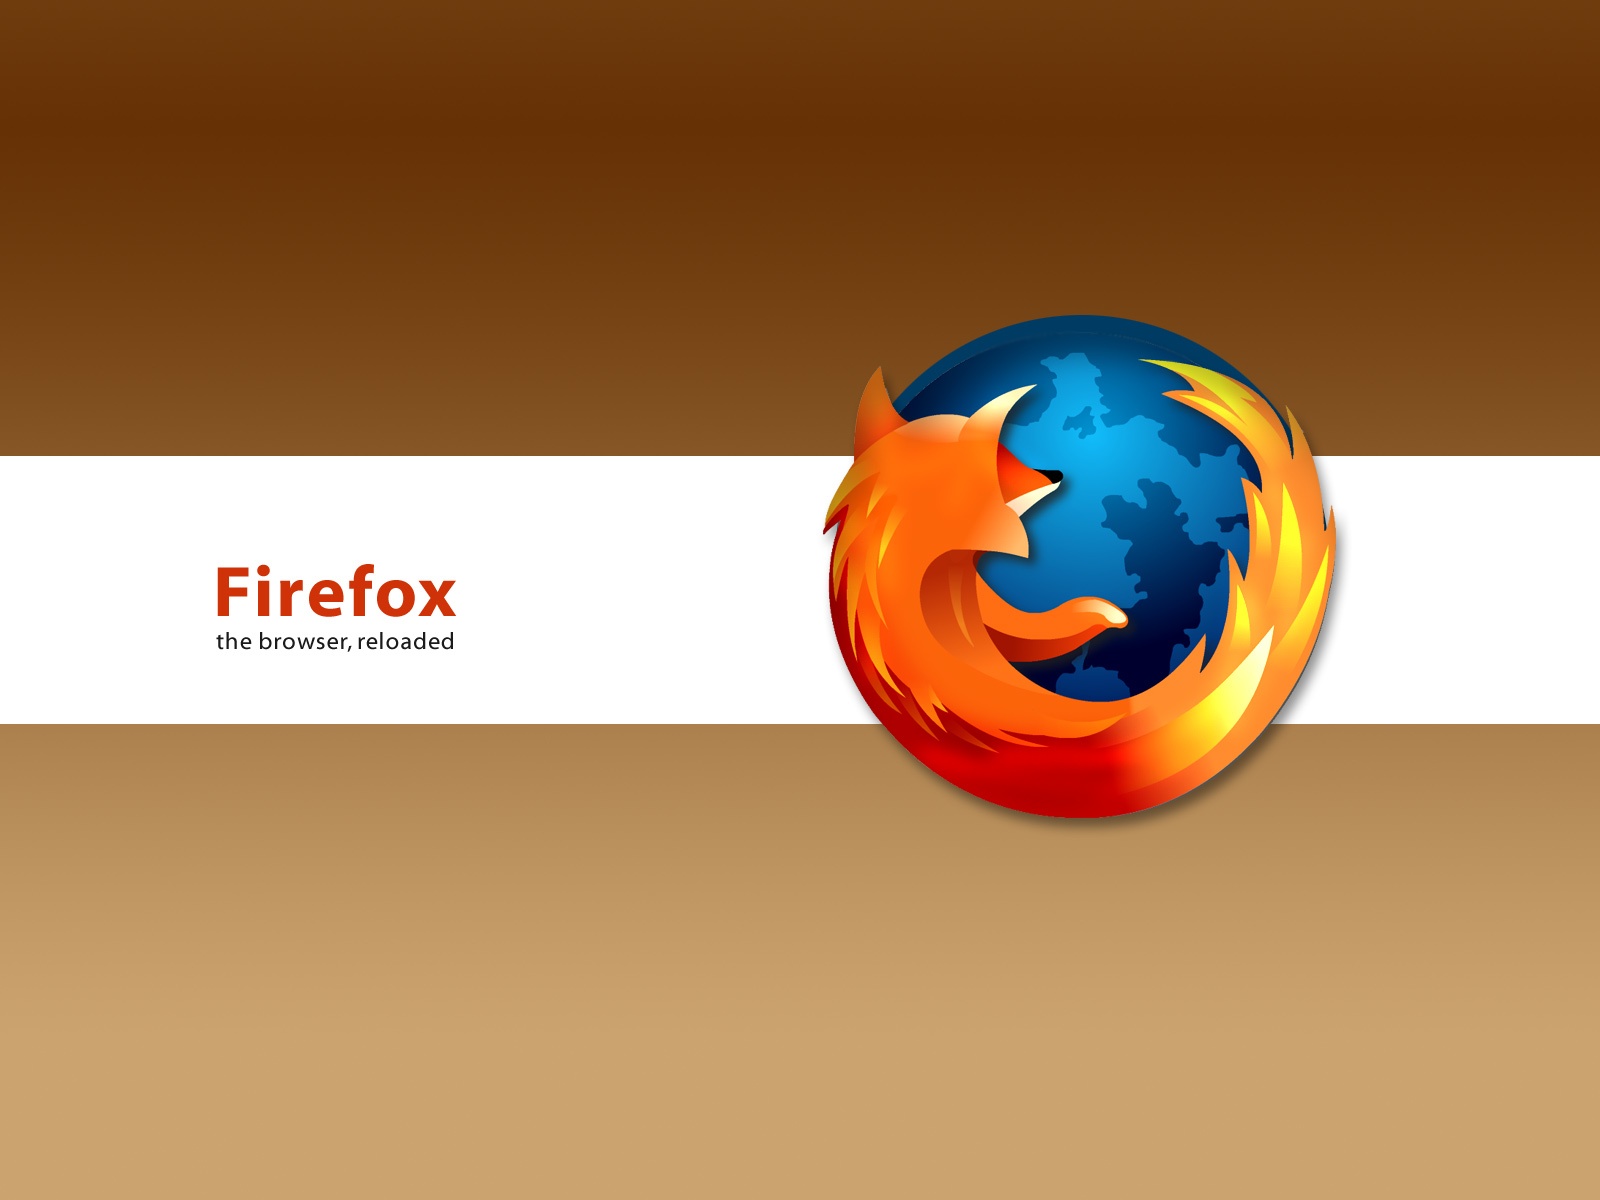 Mozilla firefox software free download for windows 7 32 bit